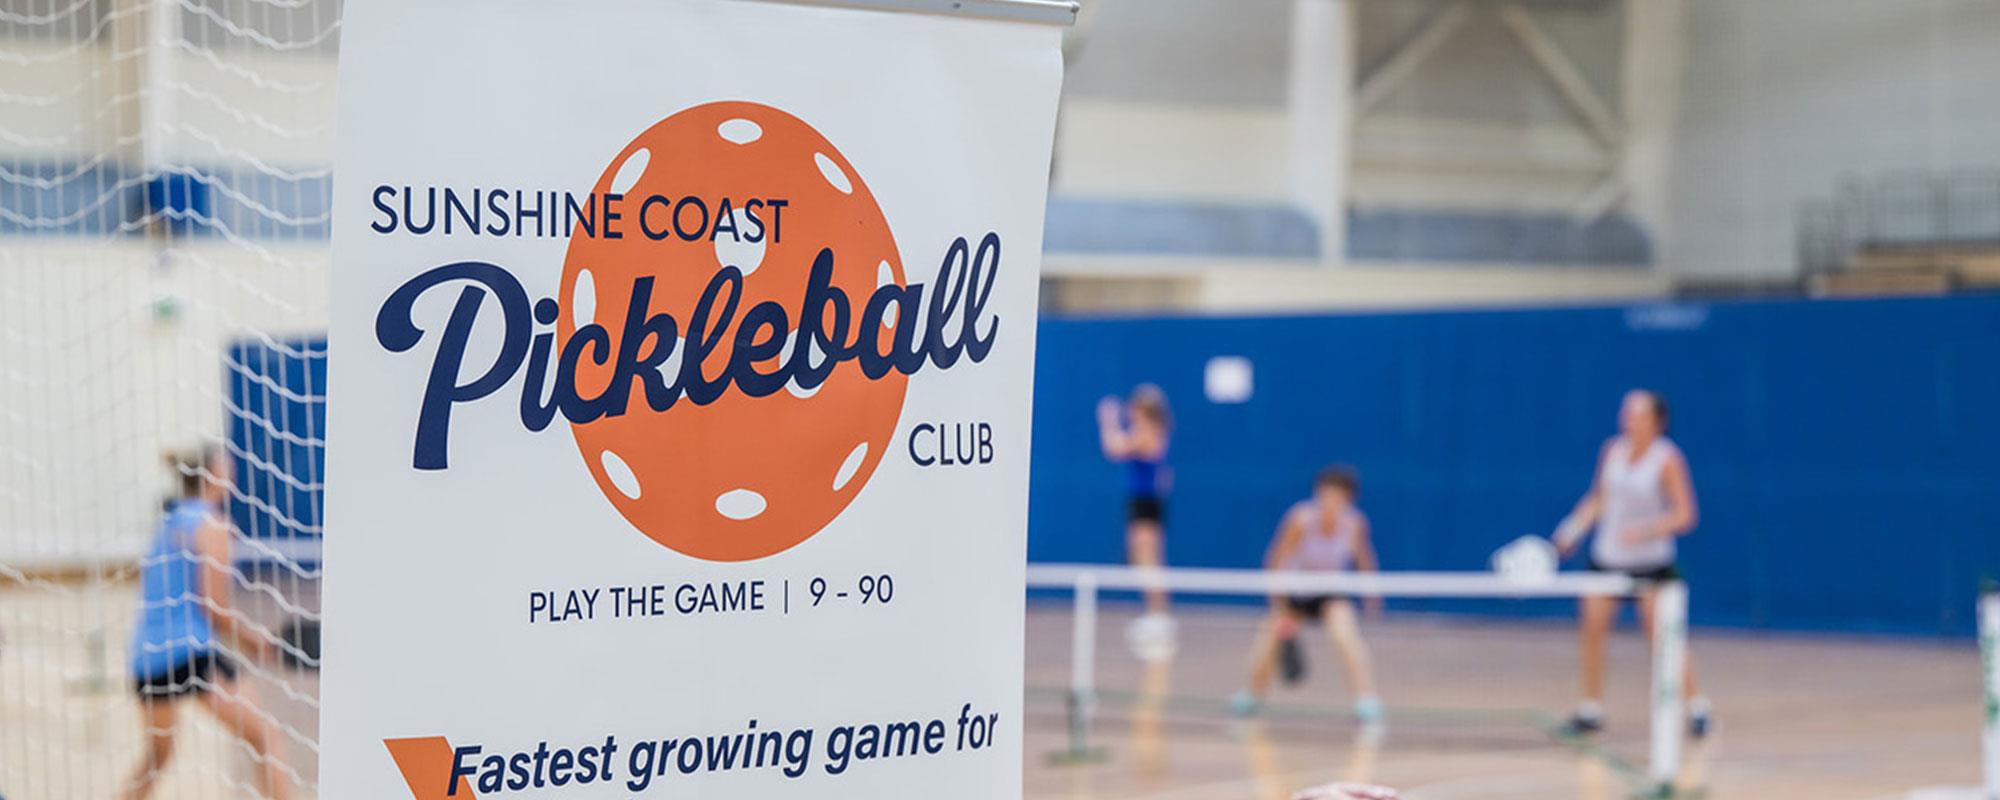 Sunshine Coast Pickleball Club Membership and Book a Game